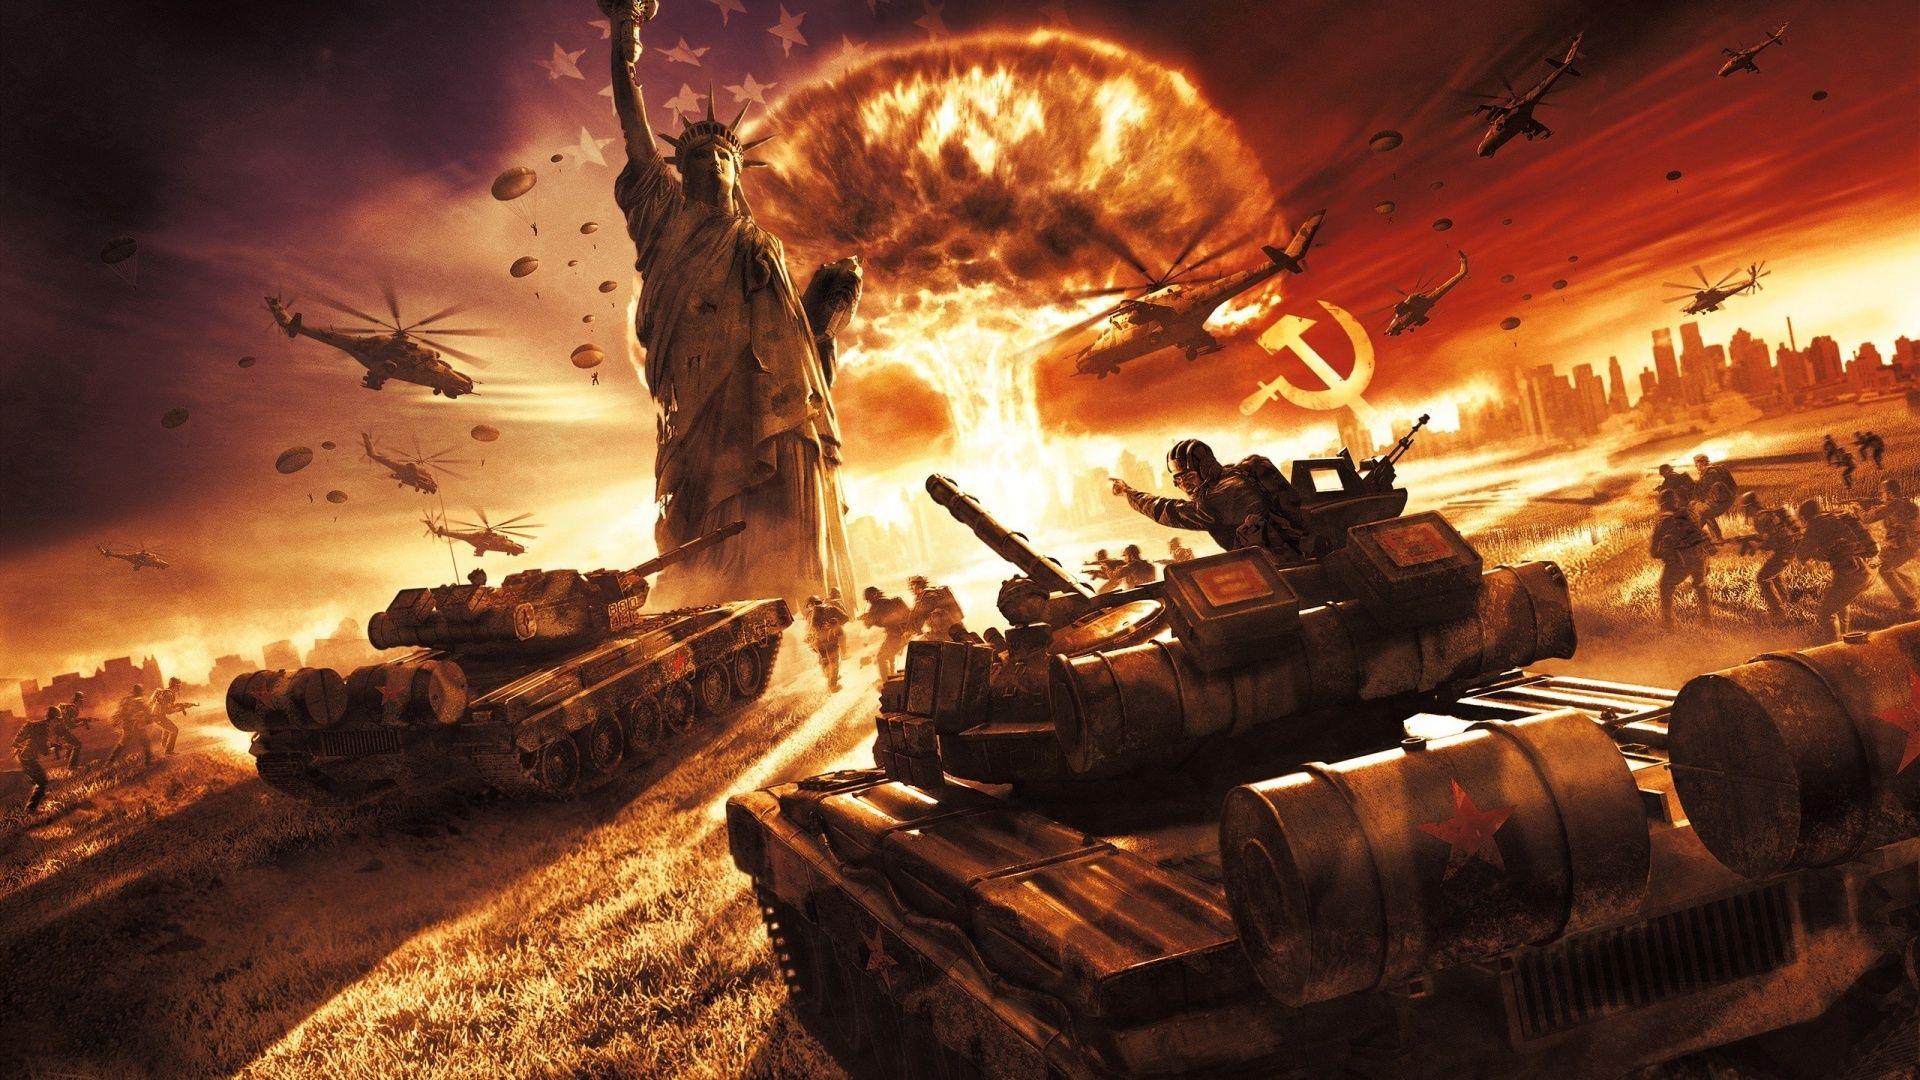 Battle HD Wallpaper, Background Image